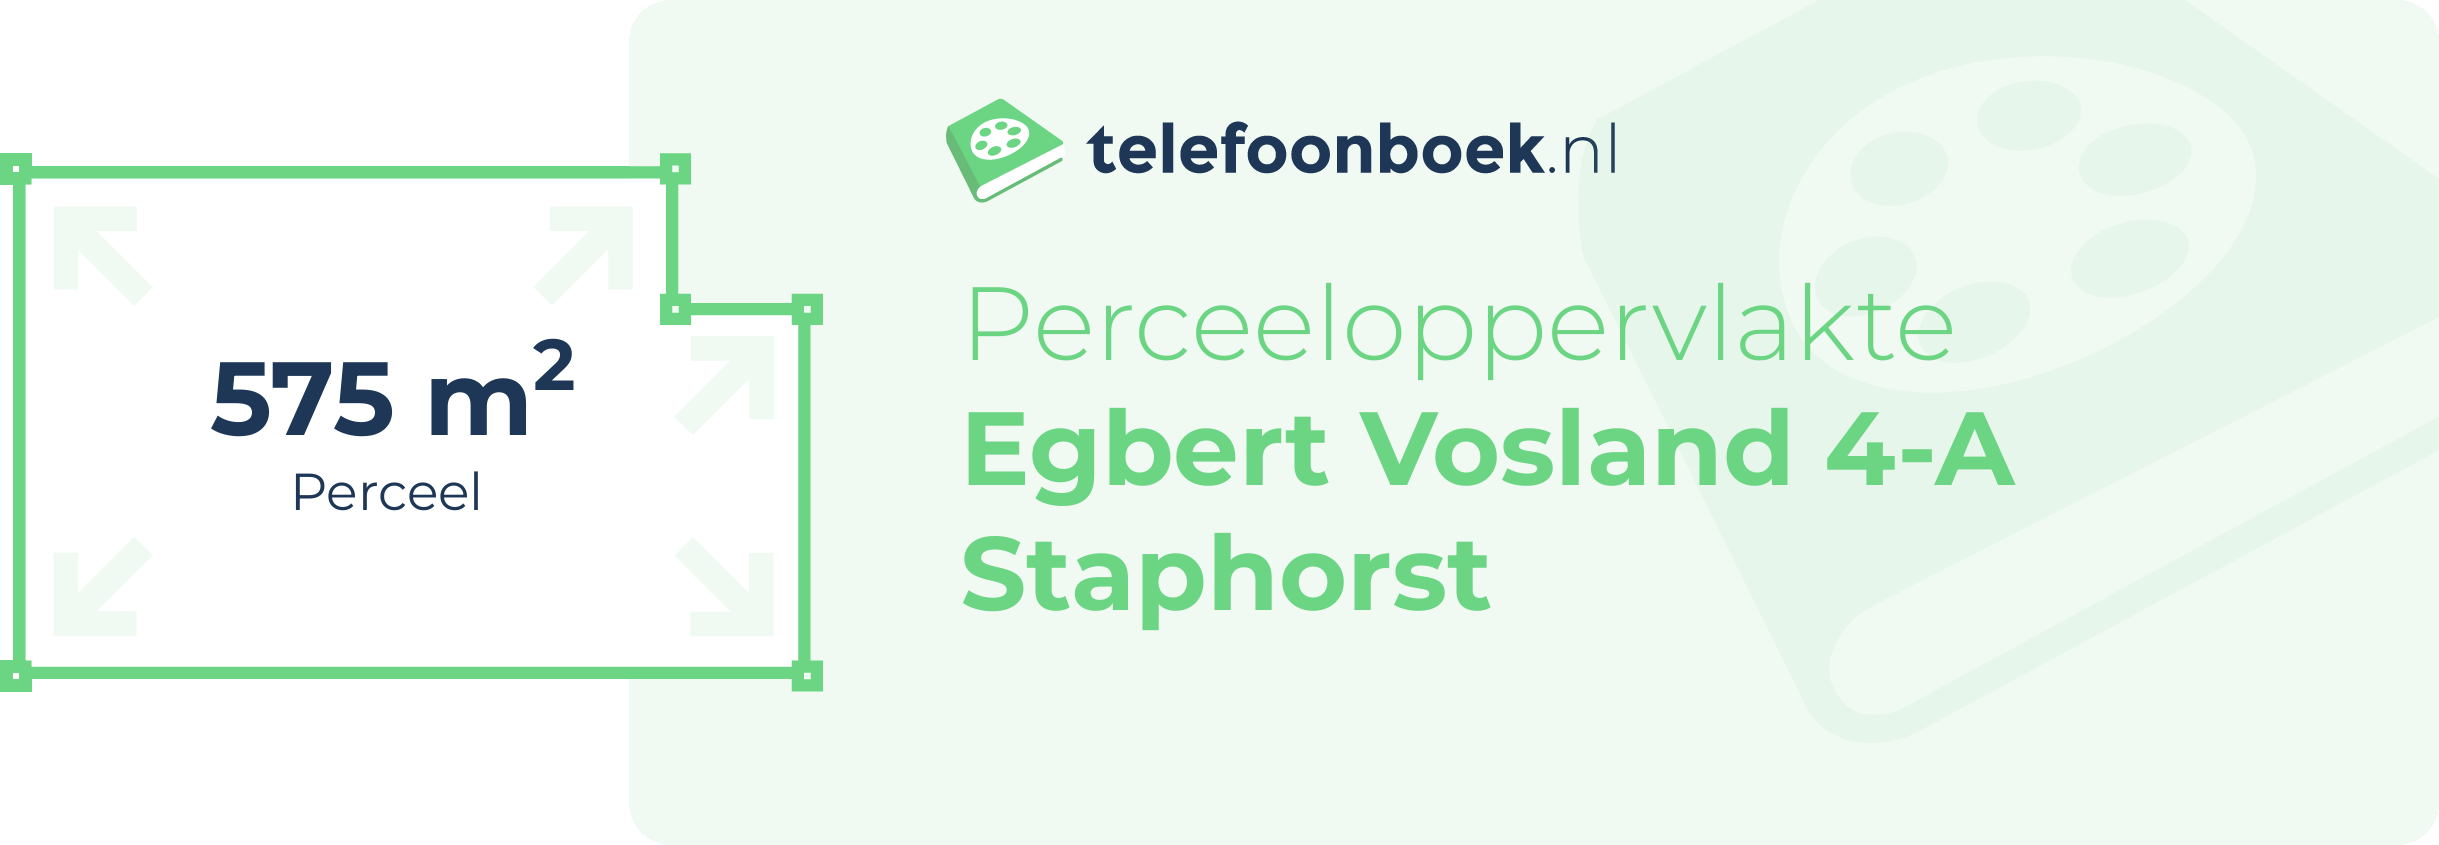 Perceeloppervlakte Egbert Vosland 4-A Staphorst